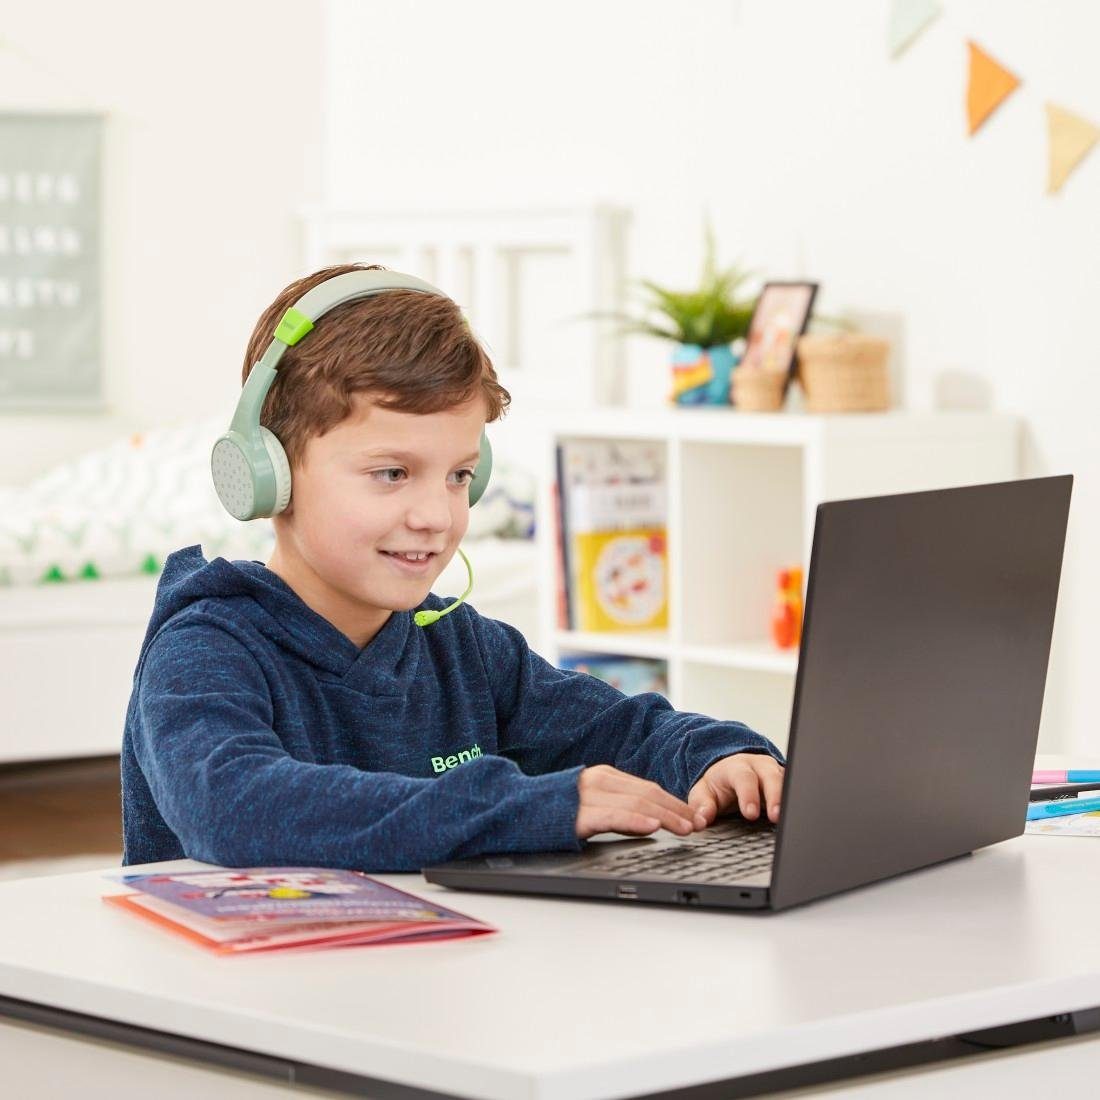 grün Bluetooth®-Kinderkopfhörer On-Ear, Kinder-Kopfhörer Guard, Lautstärkebegrenzung Teens Hama